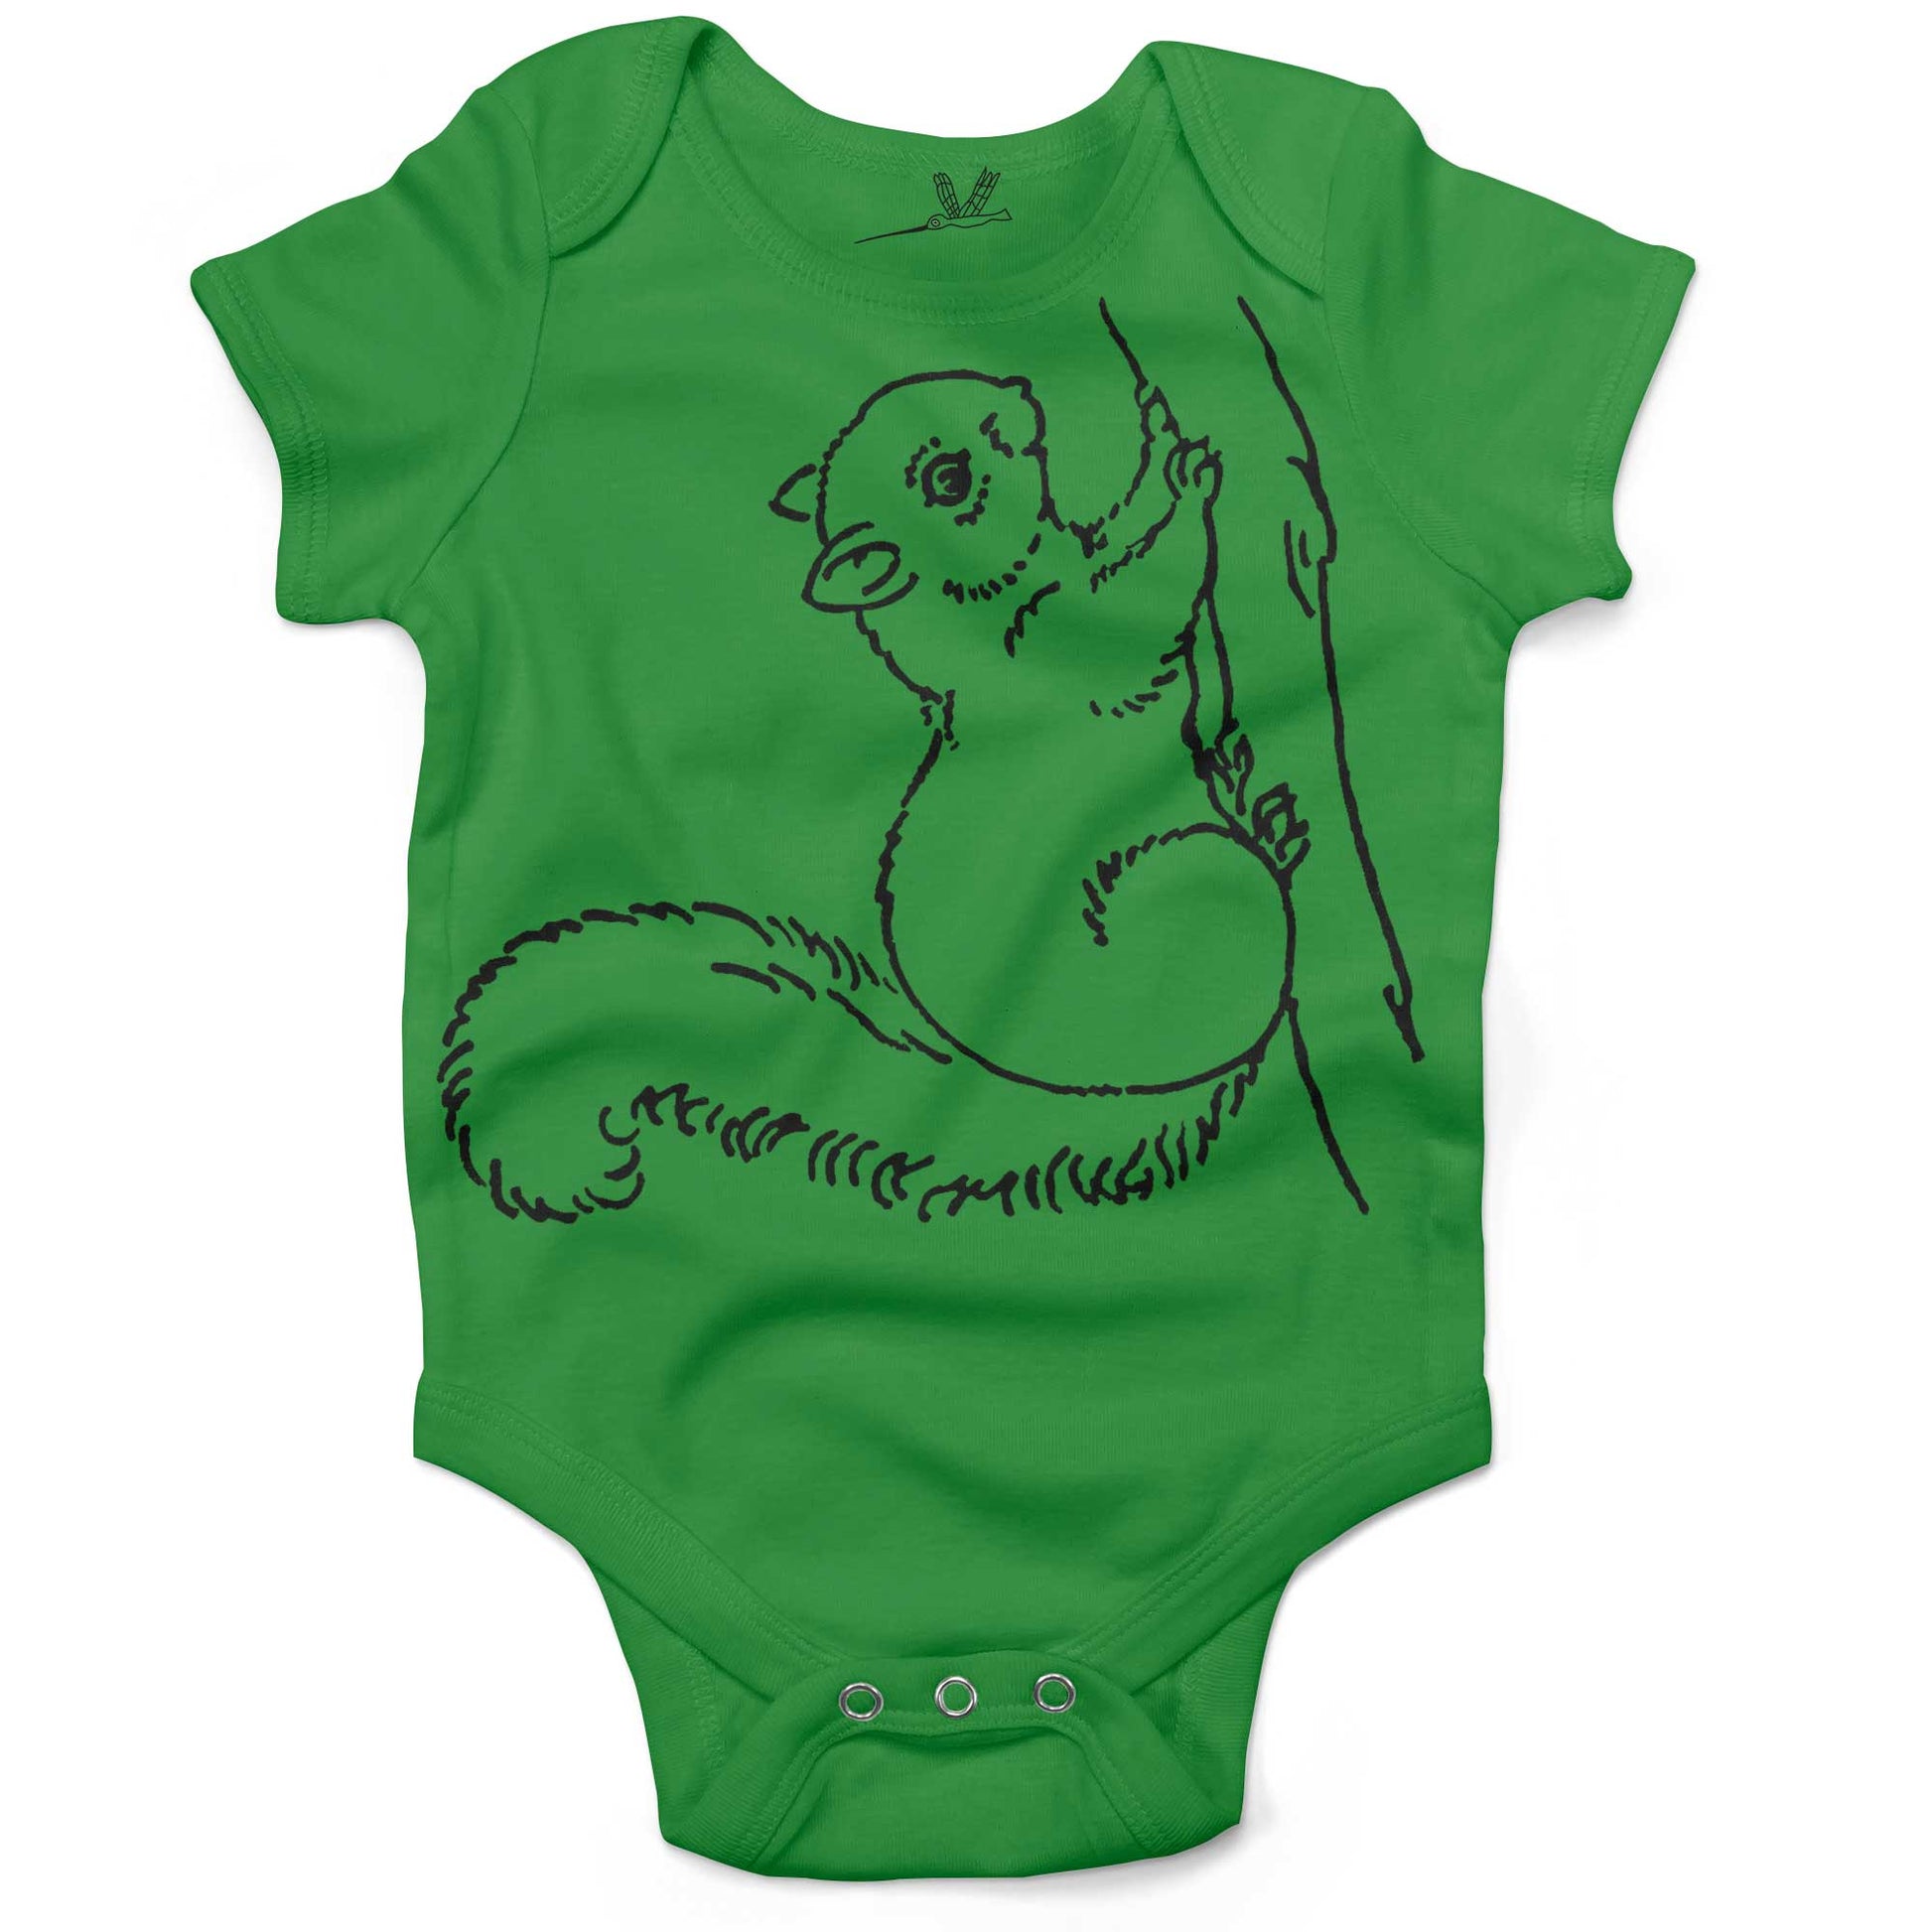 Super Cute Squirrel Infant Bodysuit or Raglan Baby Tee-Grass Green-3-6 months